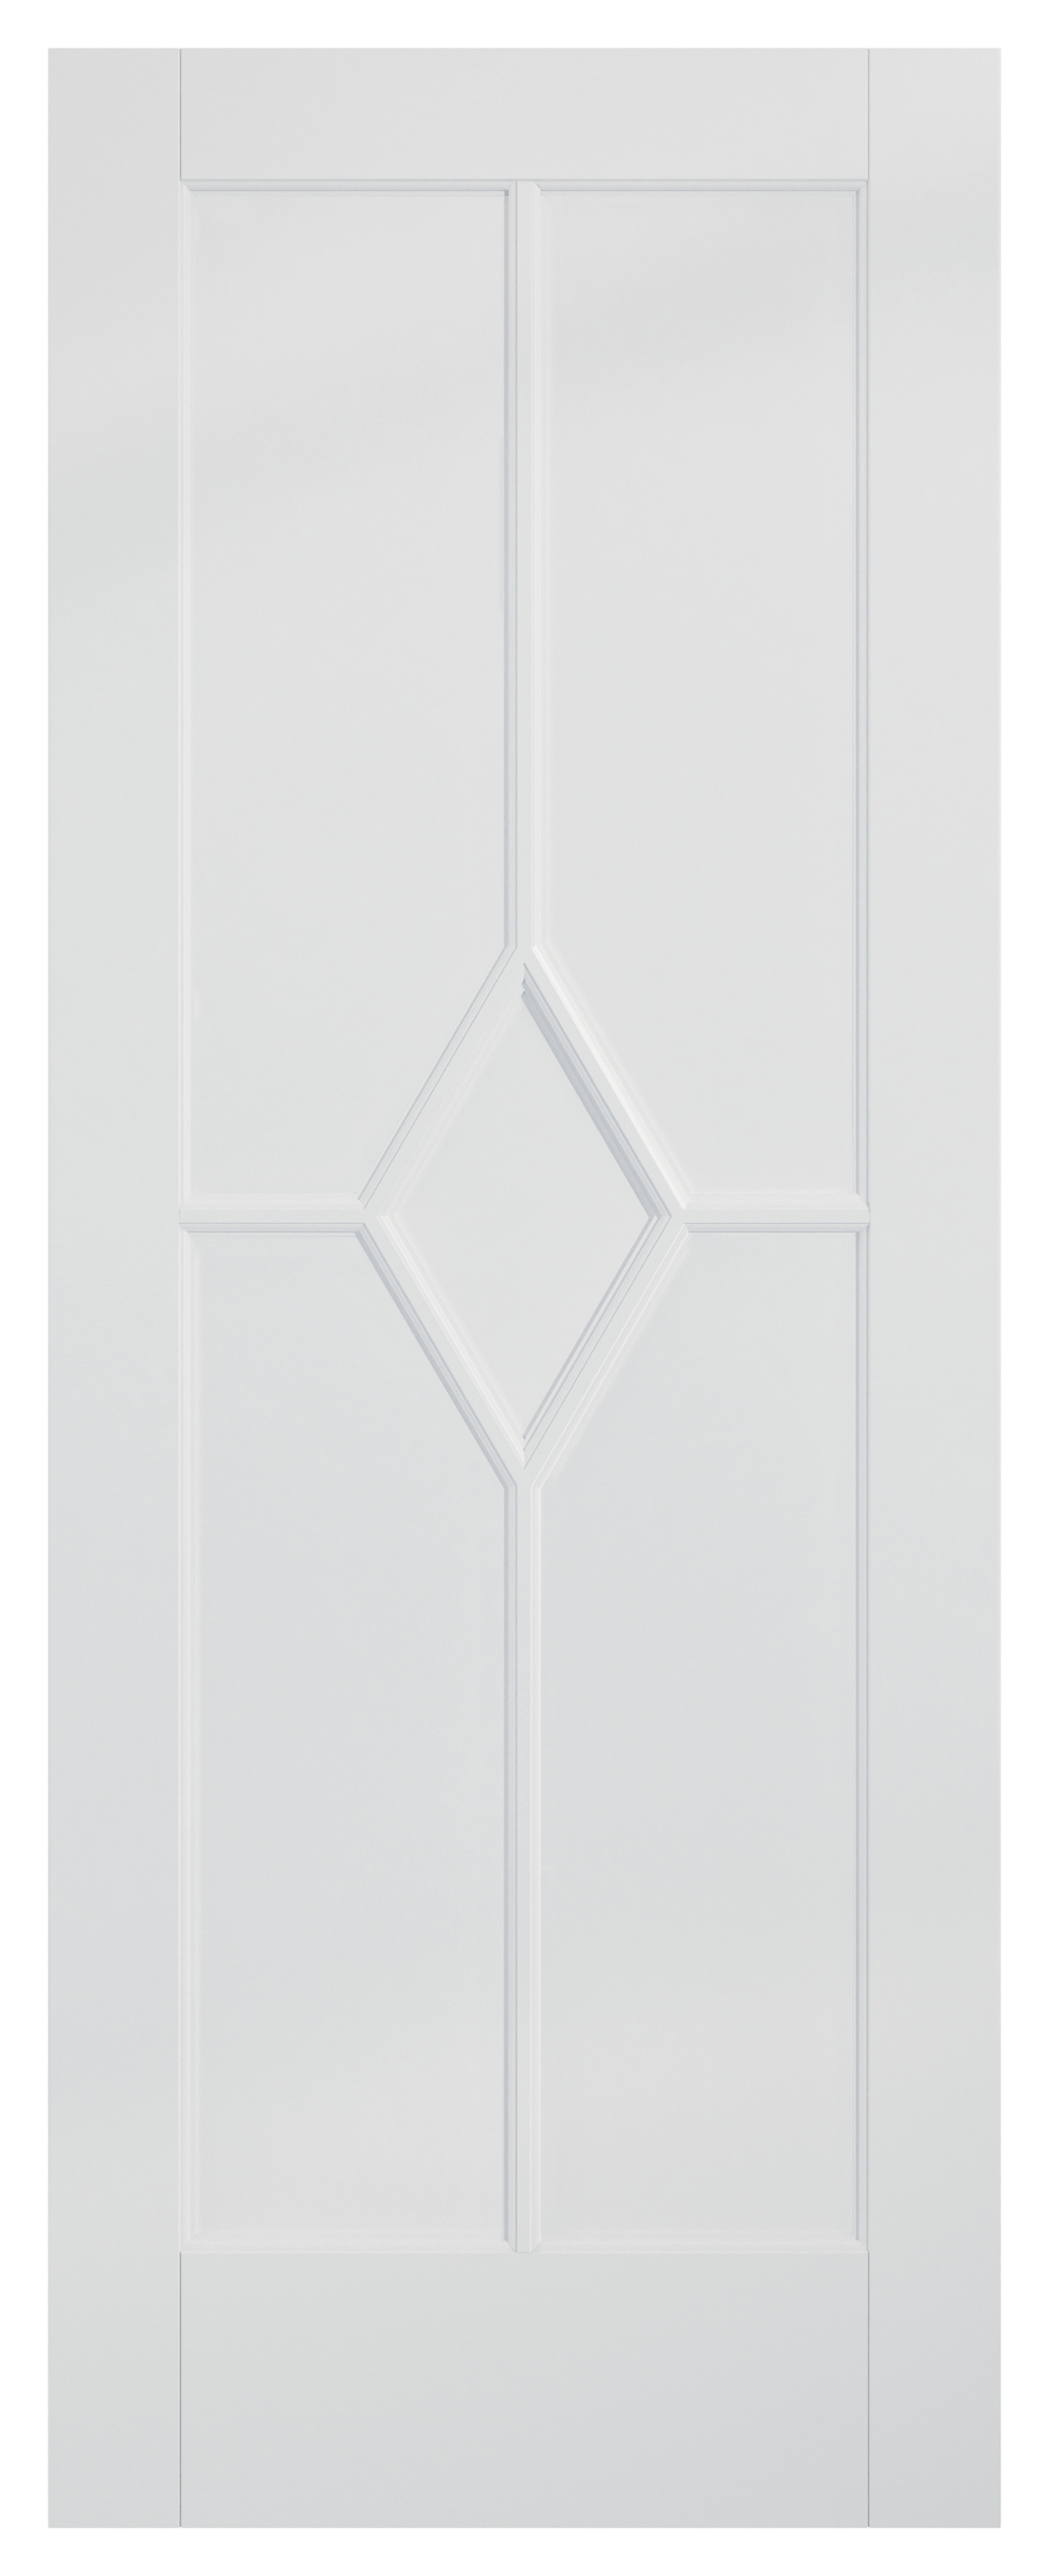 Image of LPD Internal Reims 5 Panel Primed White Solid Core Door - 686 x 1981mm